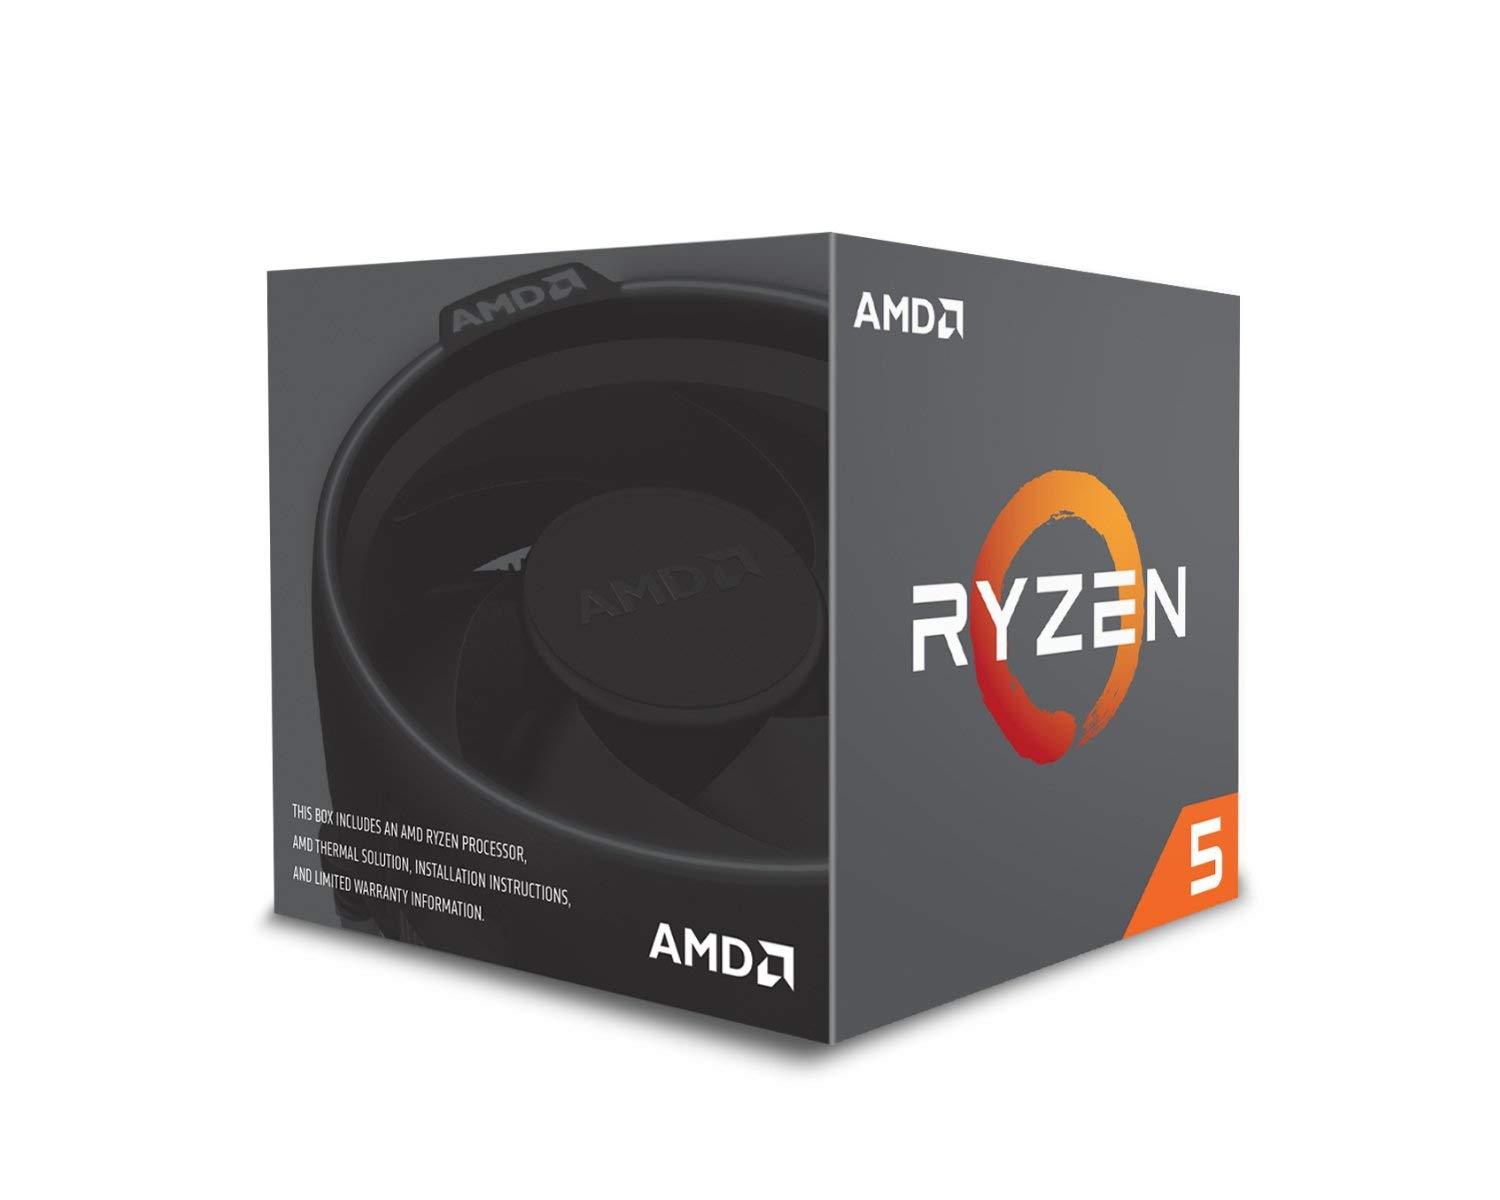 AMD Ryzen 5 2600X, 6 Core, 12 Thread, 4.0 GHz - AM4 CPU - Store 974 | ستور ٩٧٤